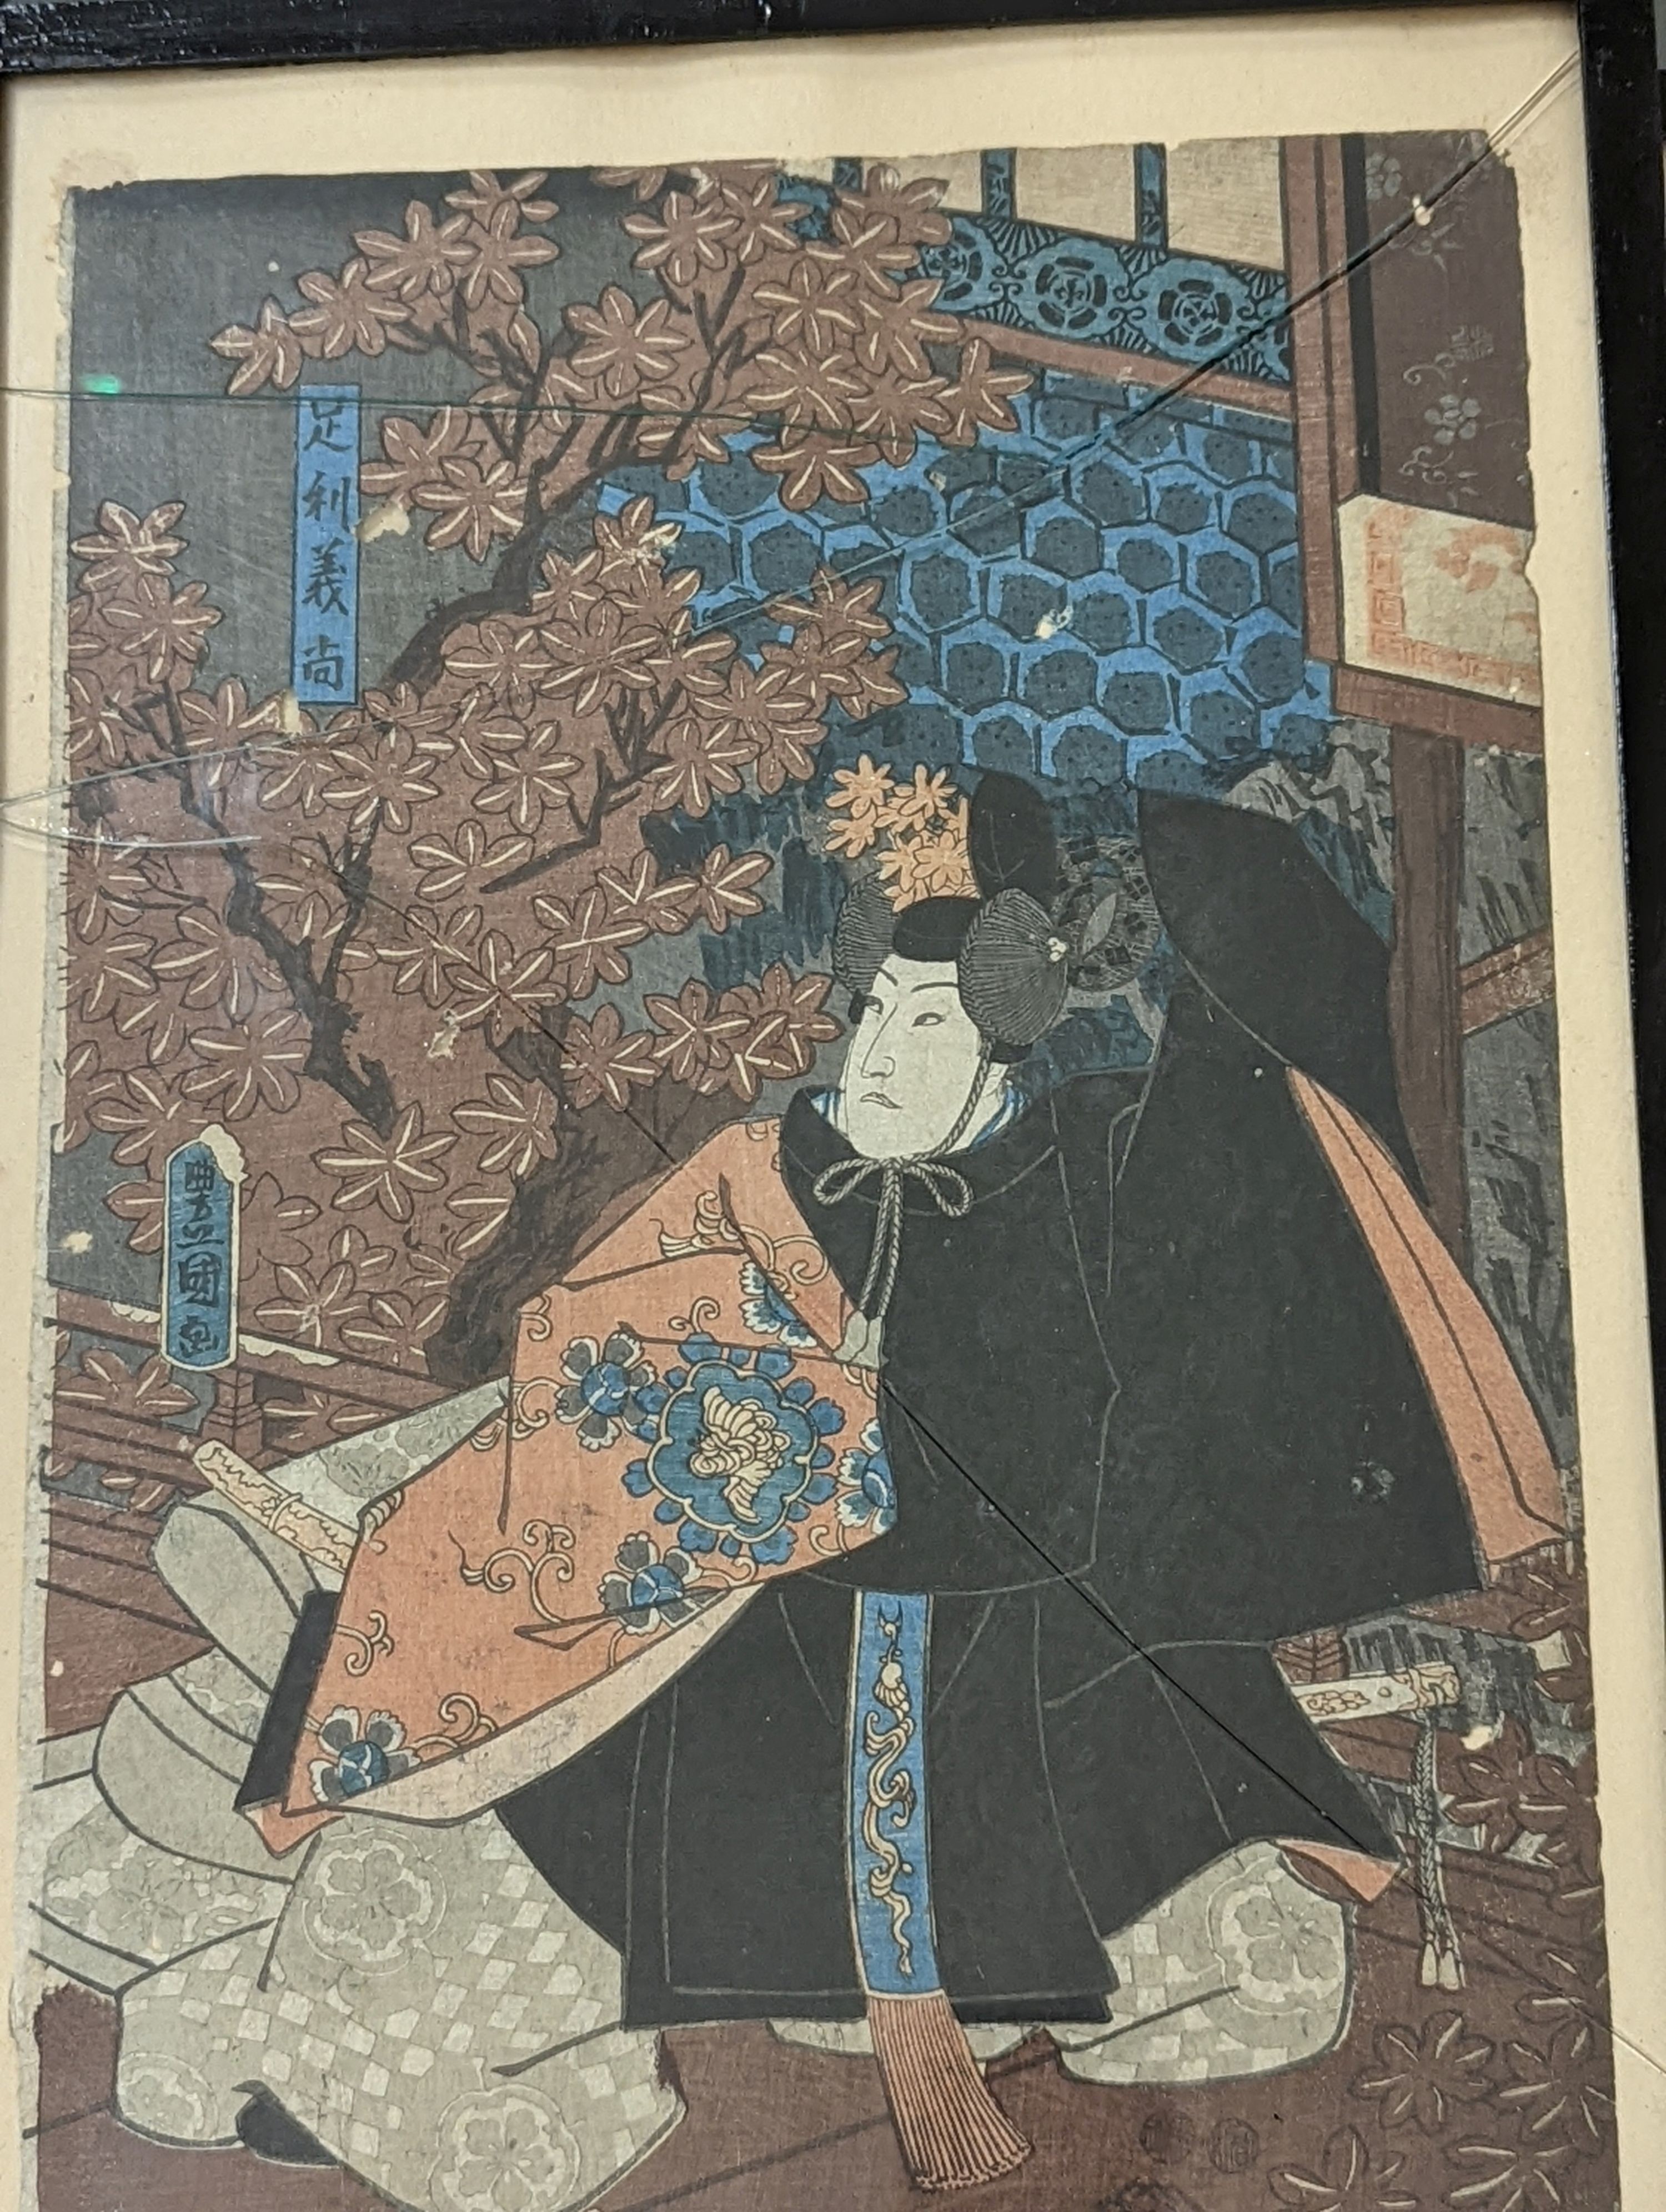 Kunyoshi (1847-48), woodblock print, Standing figure, 35 x 24cm, with five other assorted woodblock prints of Kabuki actors